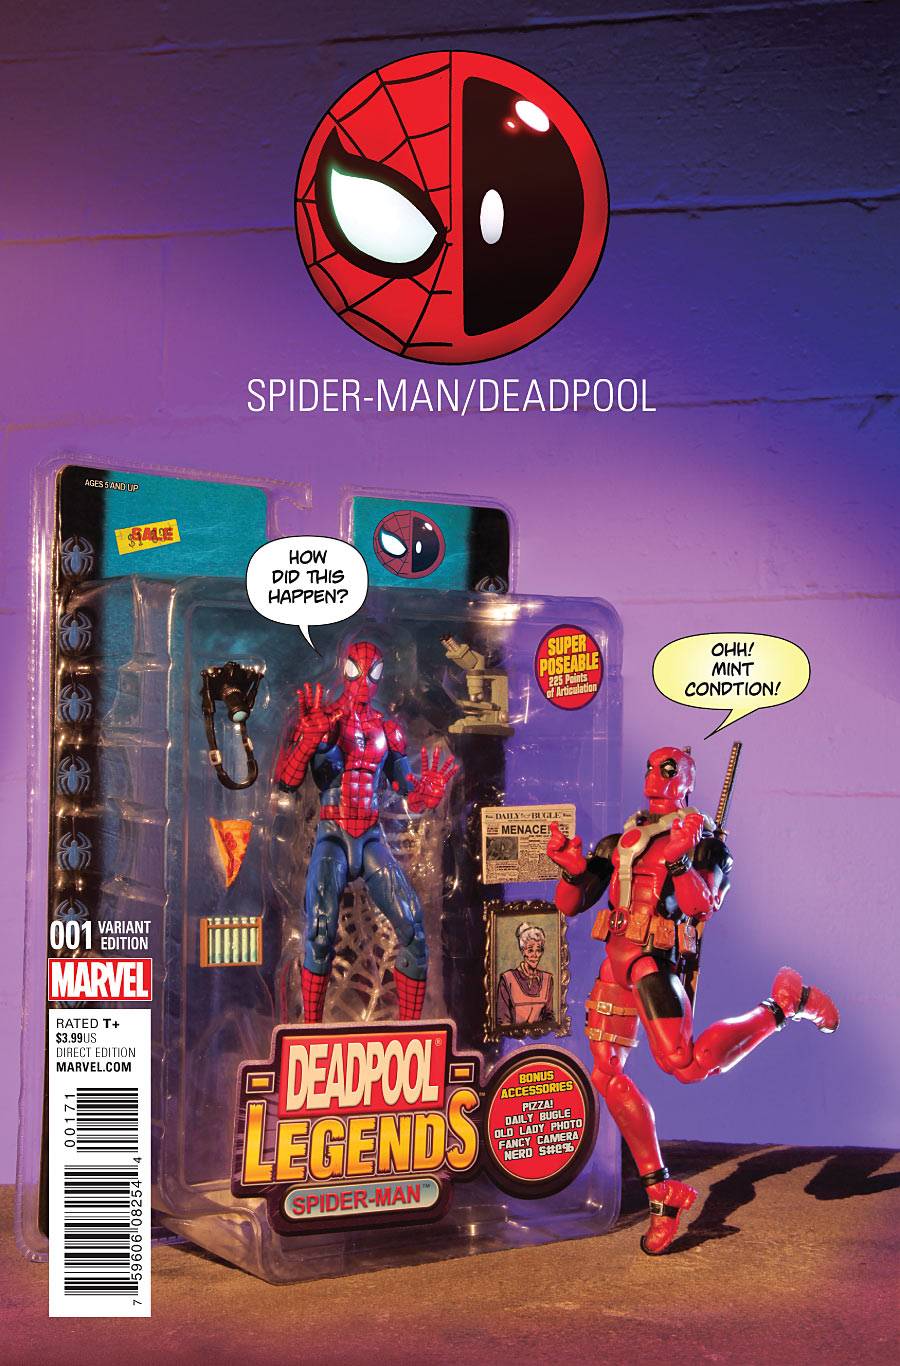 Spider-Man Deadpool #1 Action Figure Photo Variant